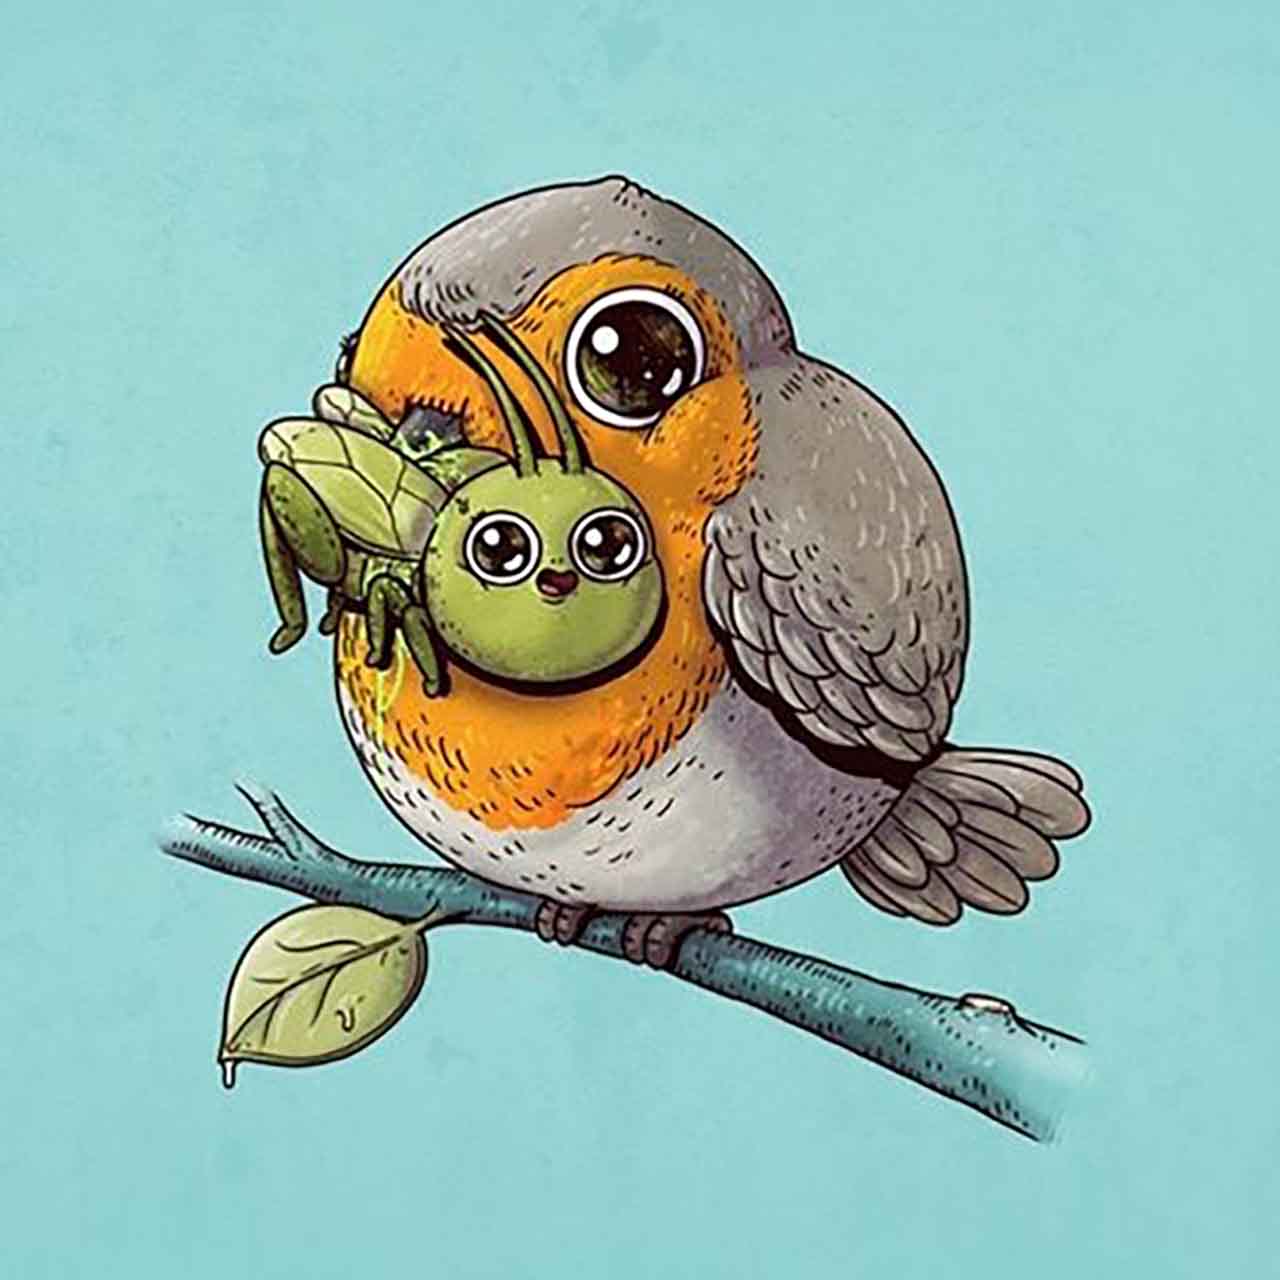  Artist Creates Extremely Adorable “Predator & Prey” Illustrations #1: Robin & Cricket 